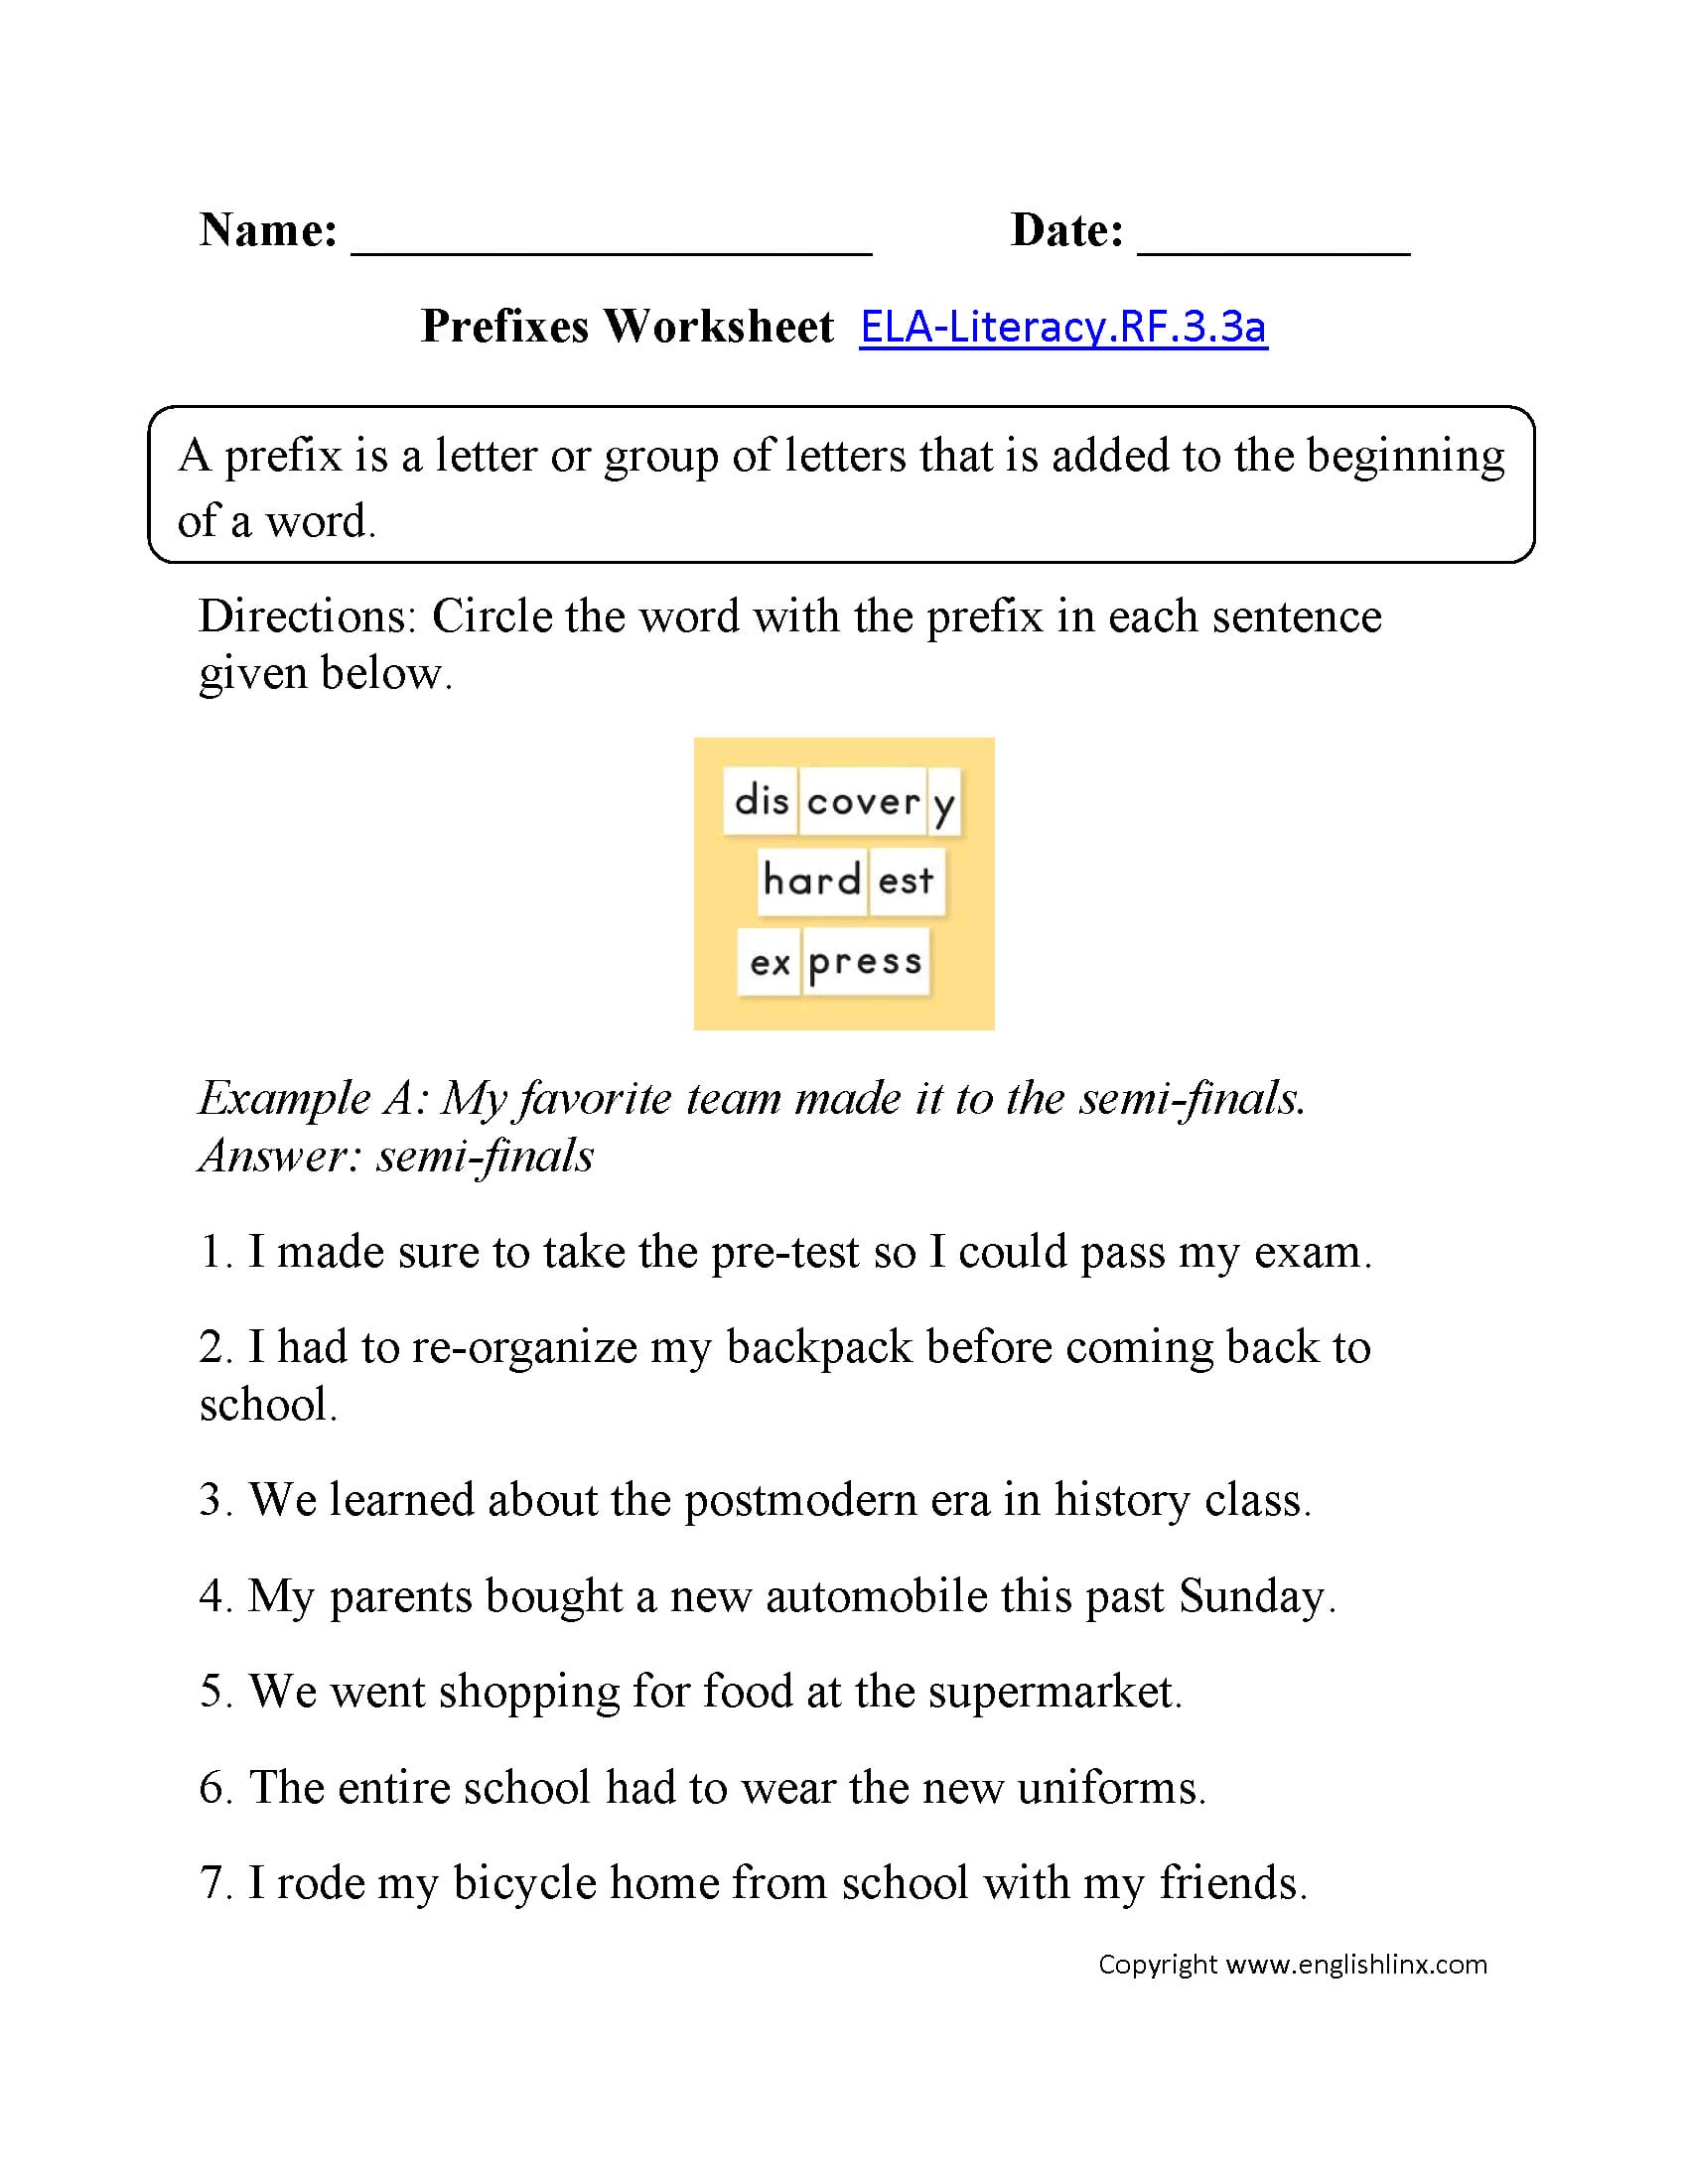 3rd-grade-reading-comprehension-worksheets-multiple-choice-pdf-db-3rd-grade-reading